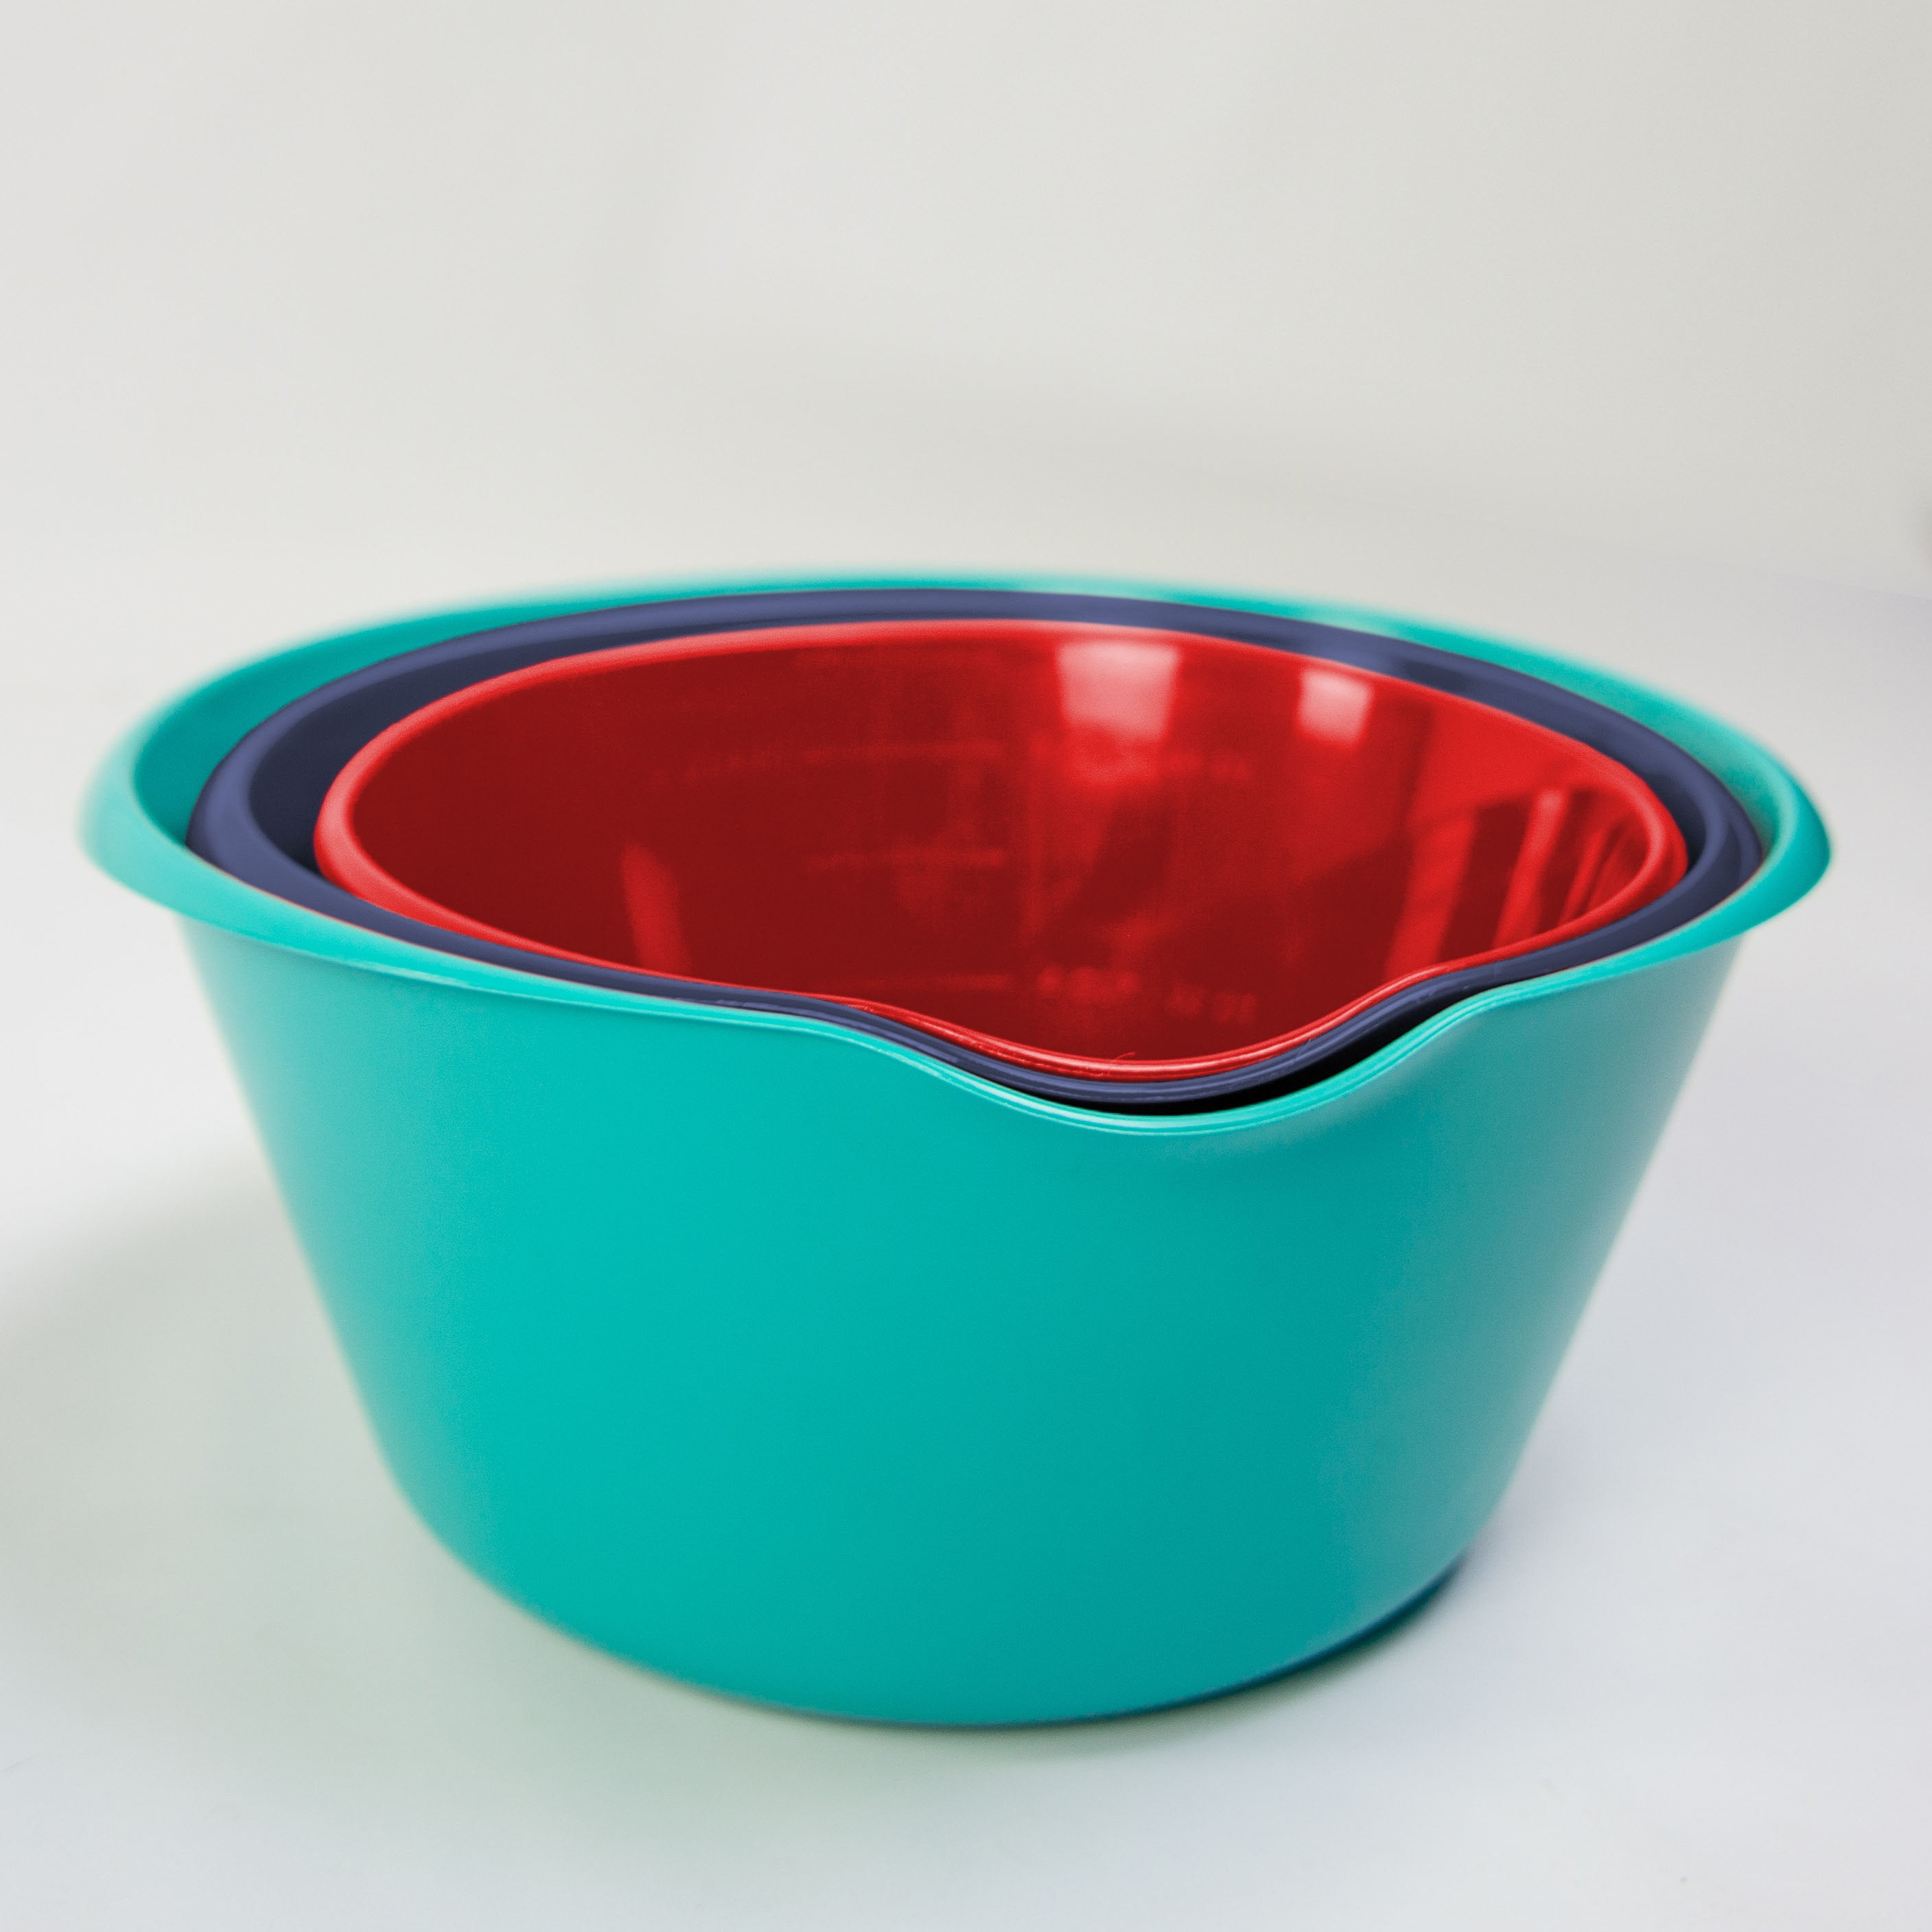 Plastic Mixing Bowls - Set of 3 – Jean Patrique Professional Cookware